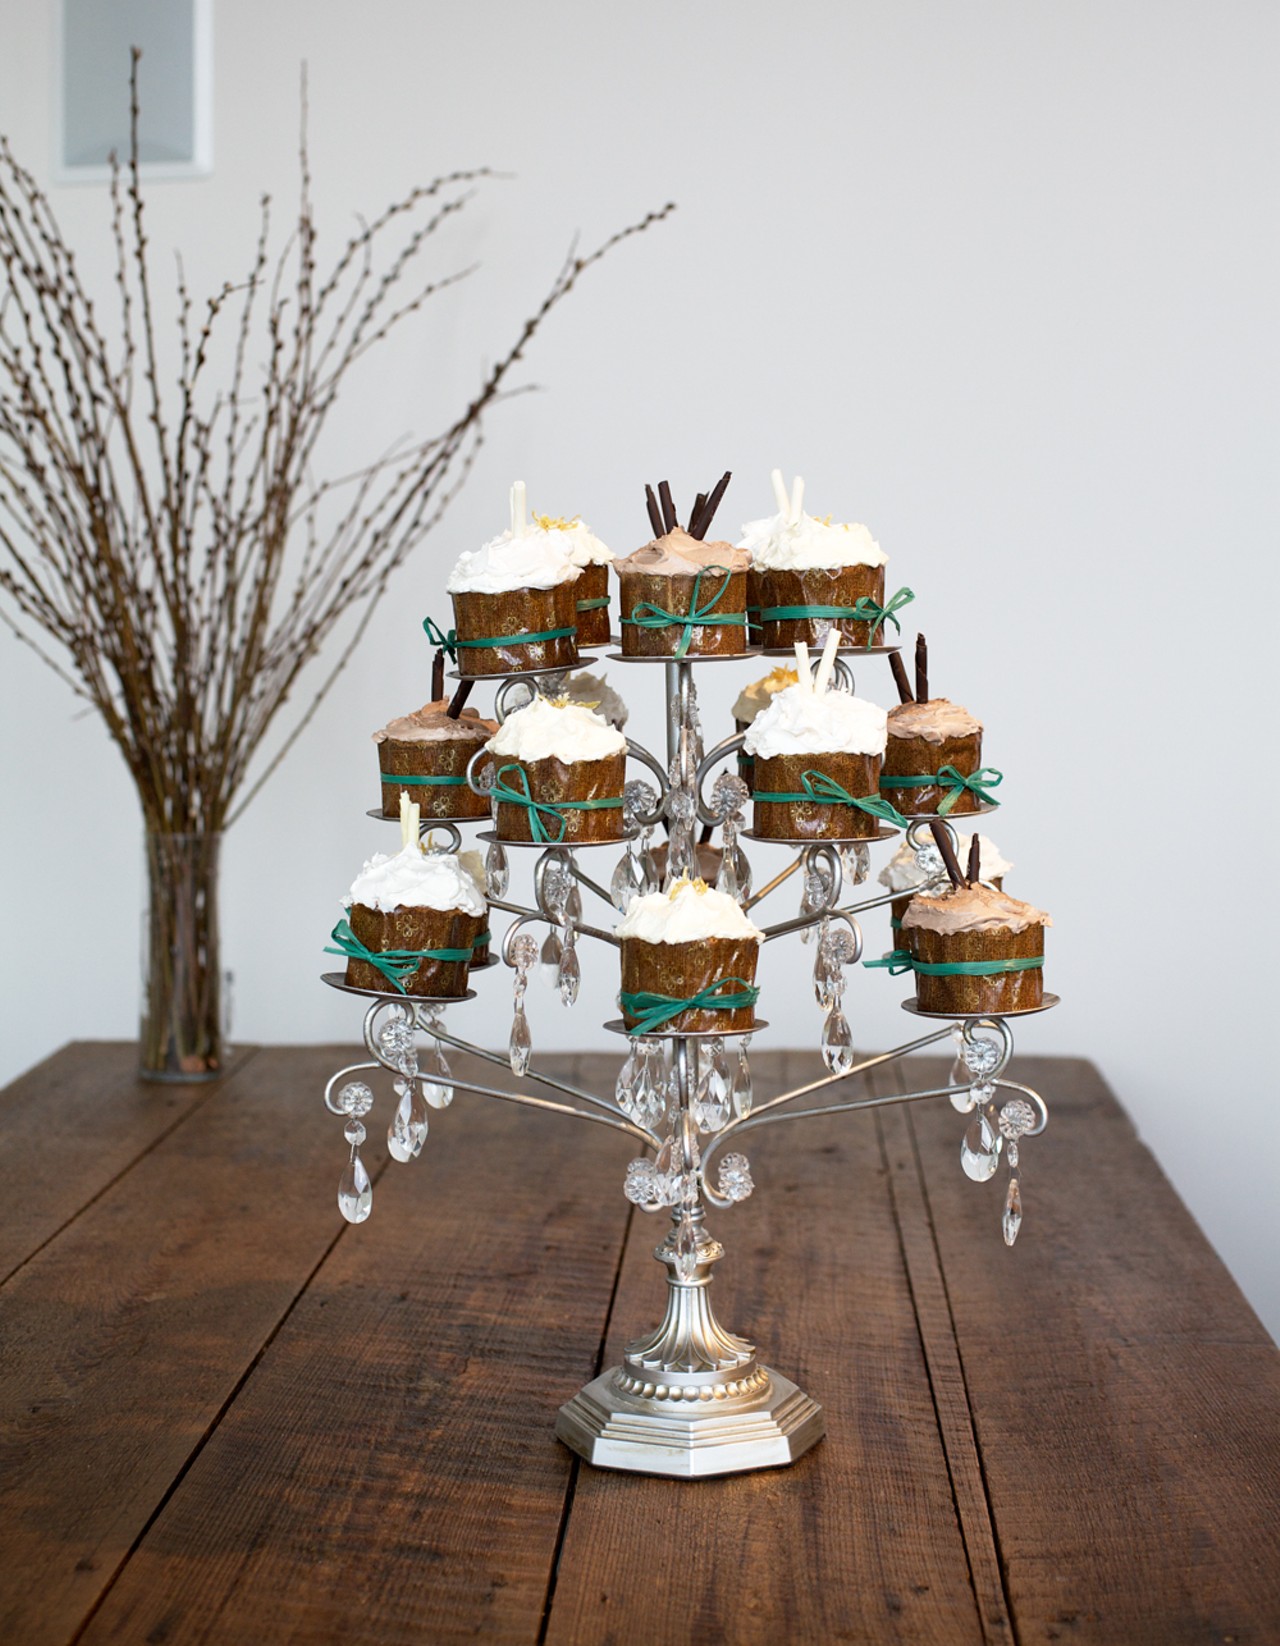 The delightful tower of mini cakes -- Mmm, buttercream.